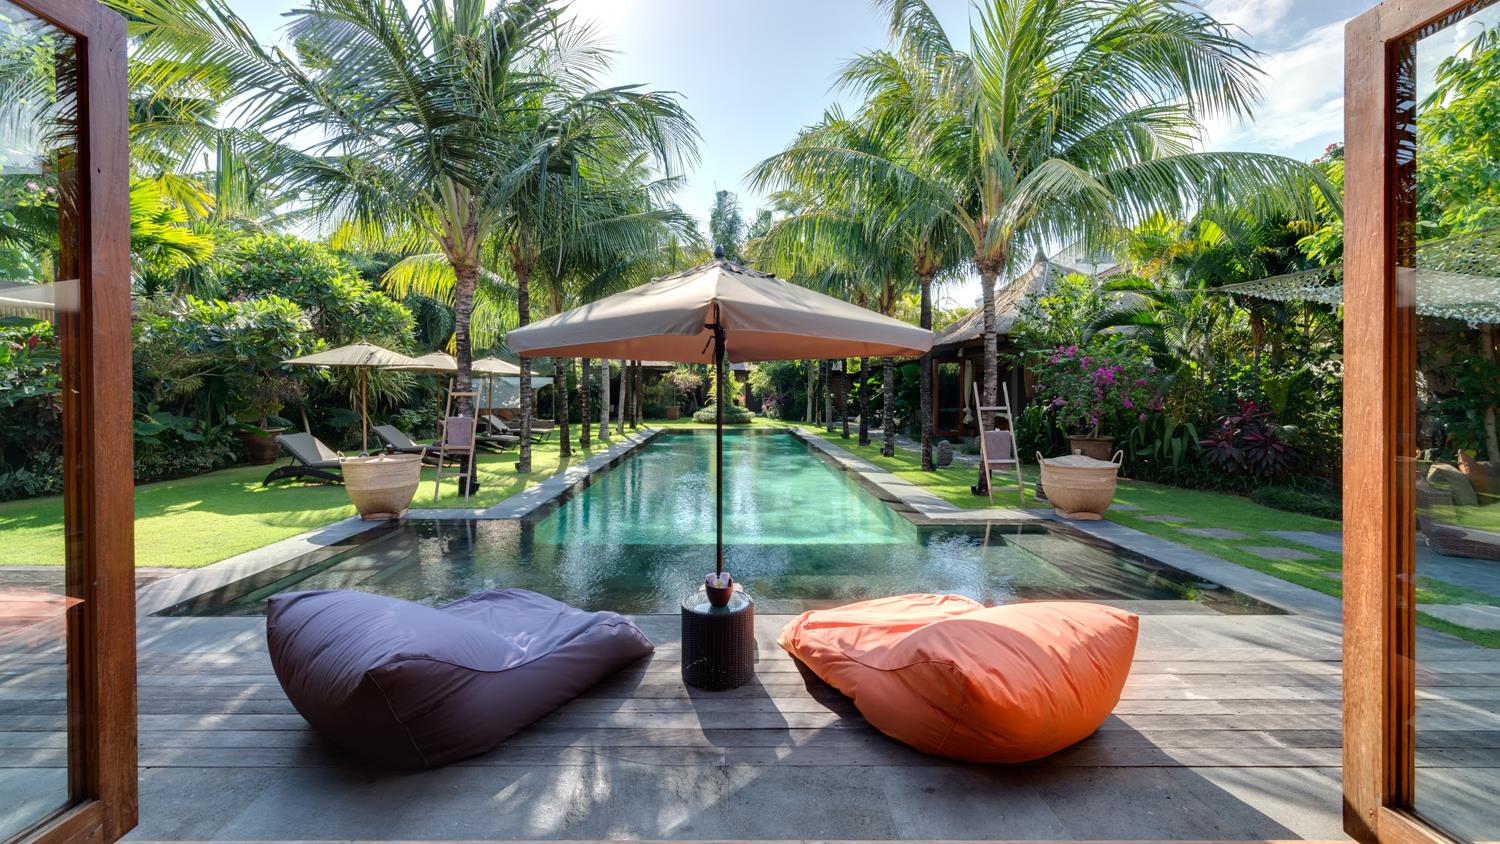 Pool Side Seating Area - Villa Shambala - Seminyak, Bali